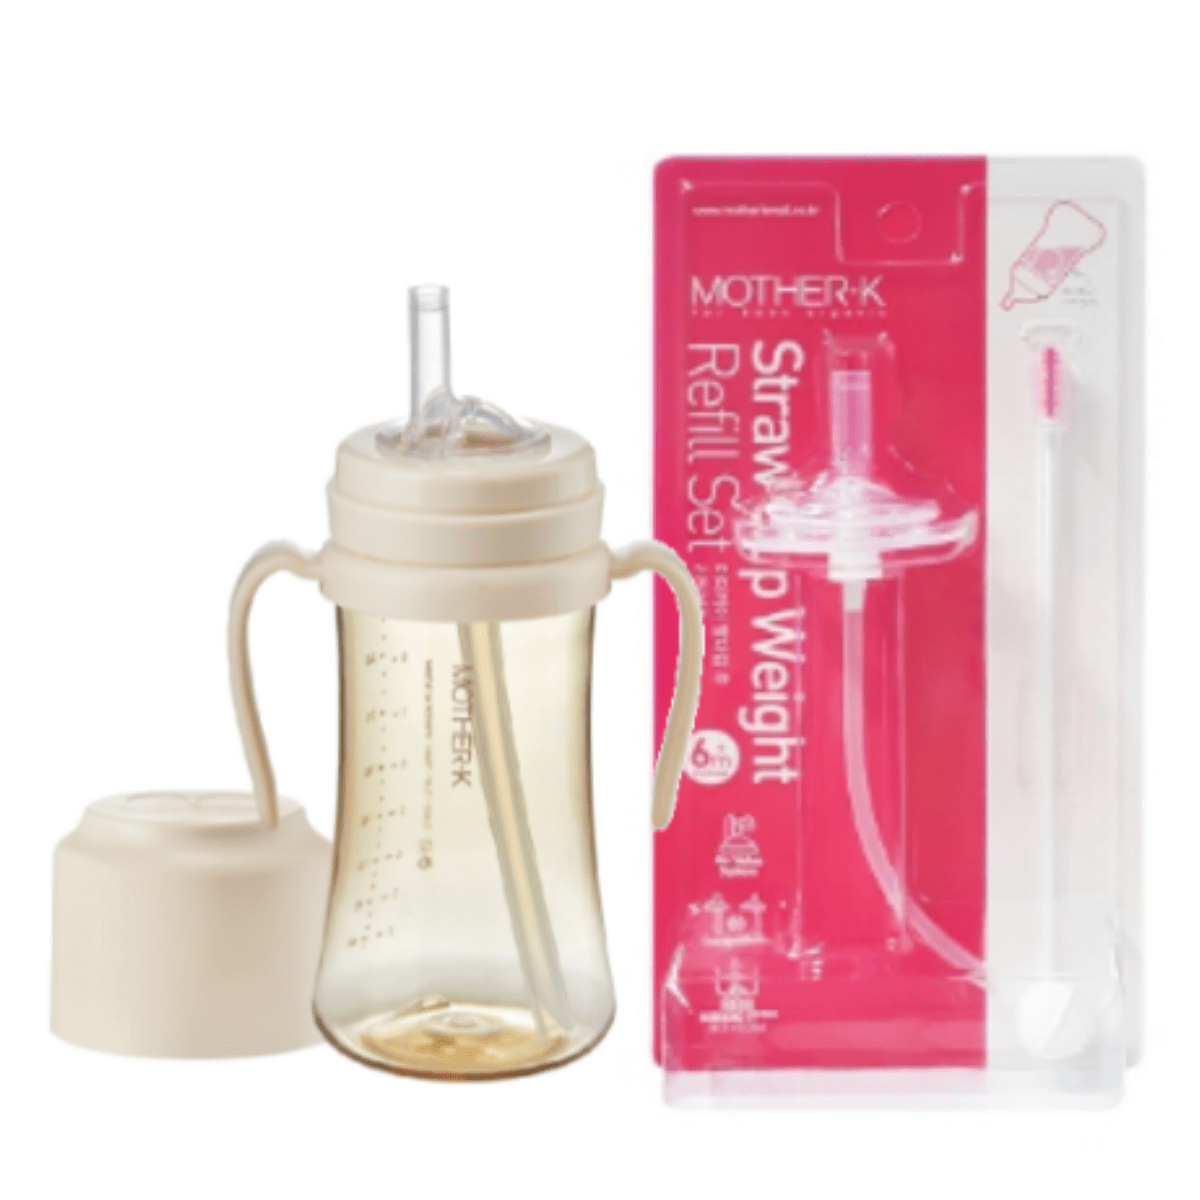 Mother-K PPSU Straw Bottle 300mL (Cream) & Weight Refill Set (with brush)